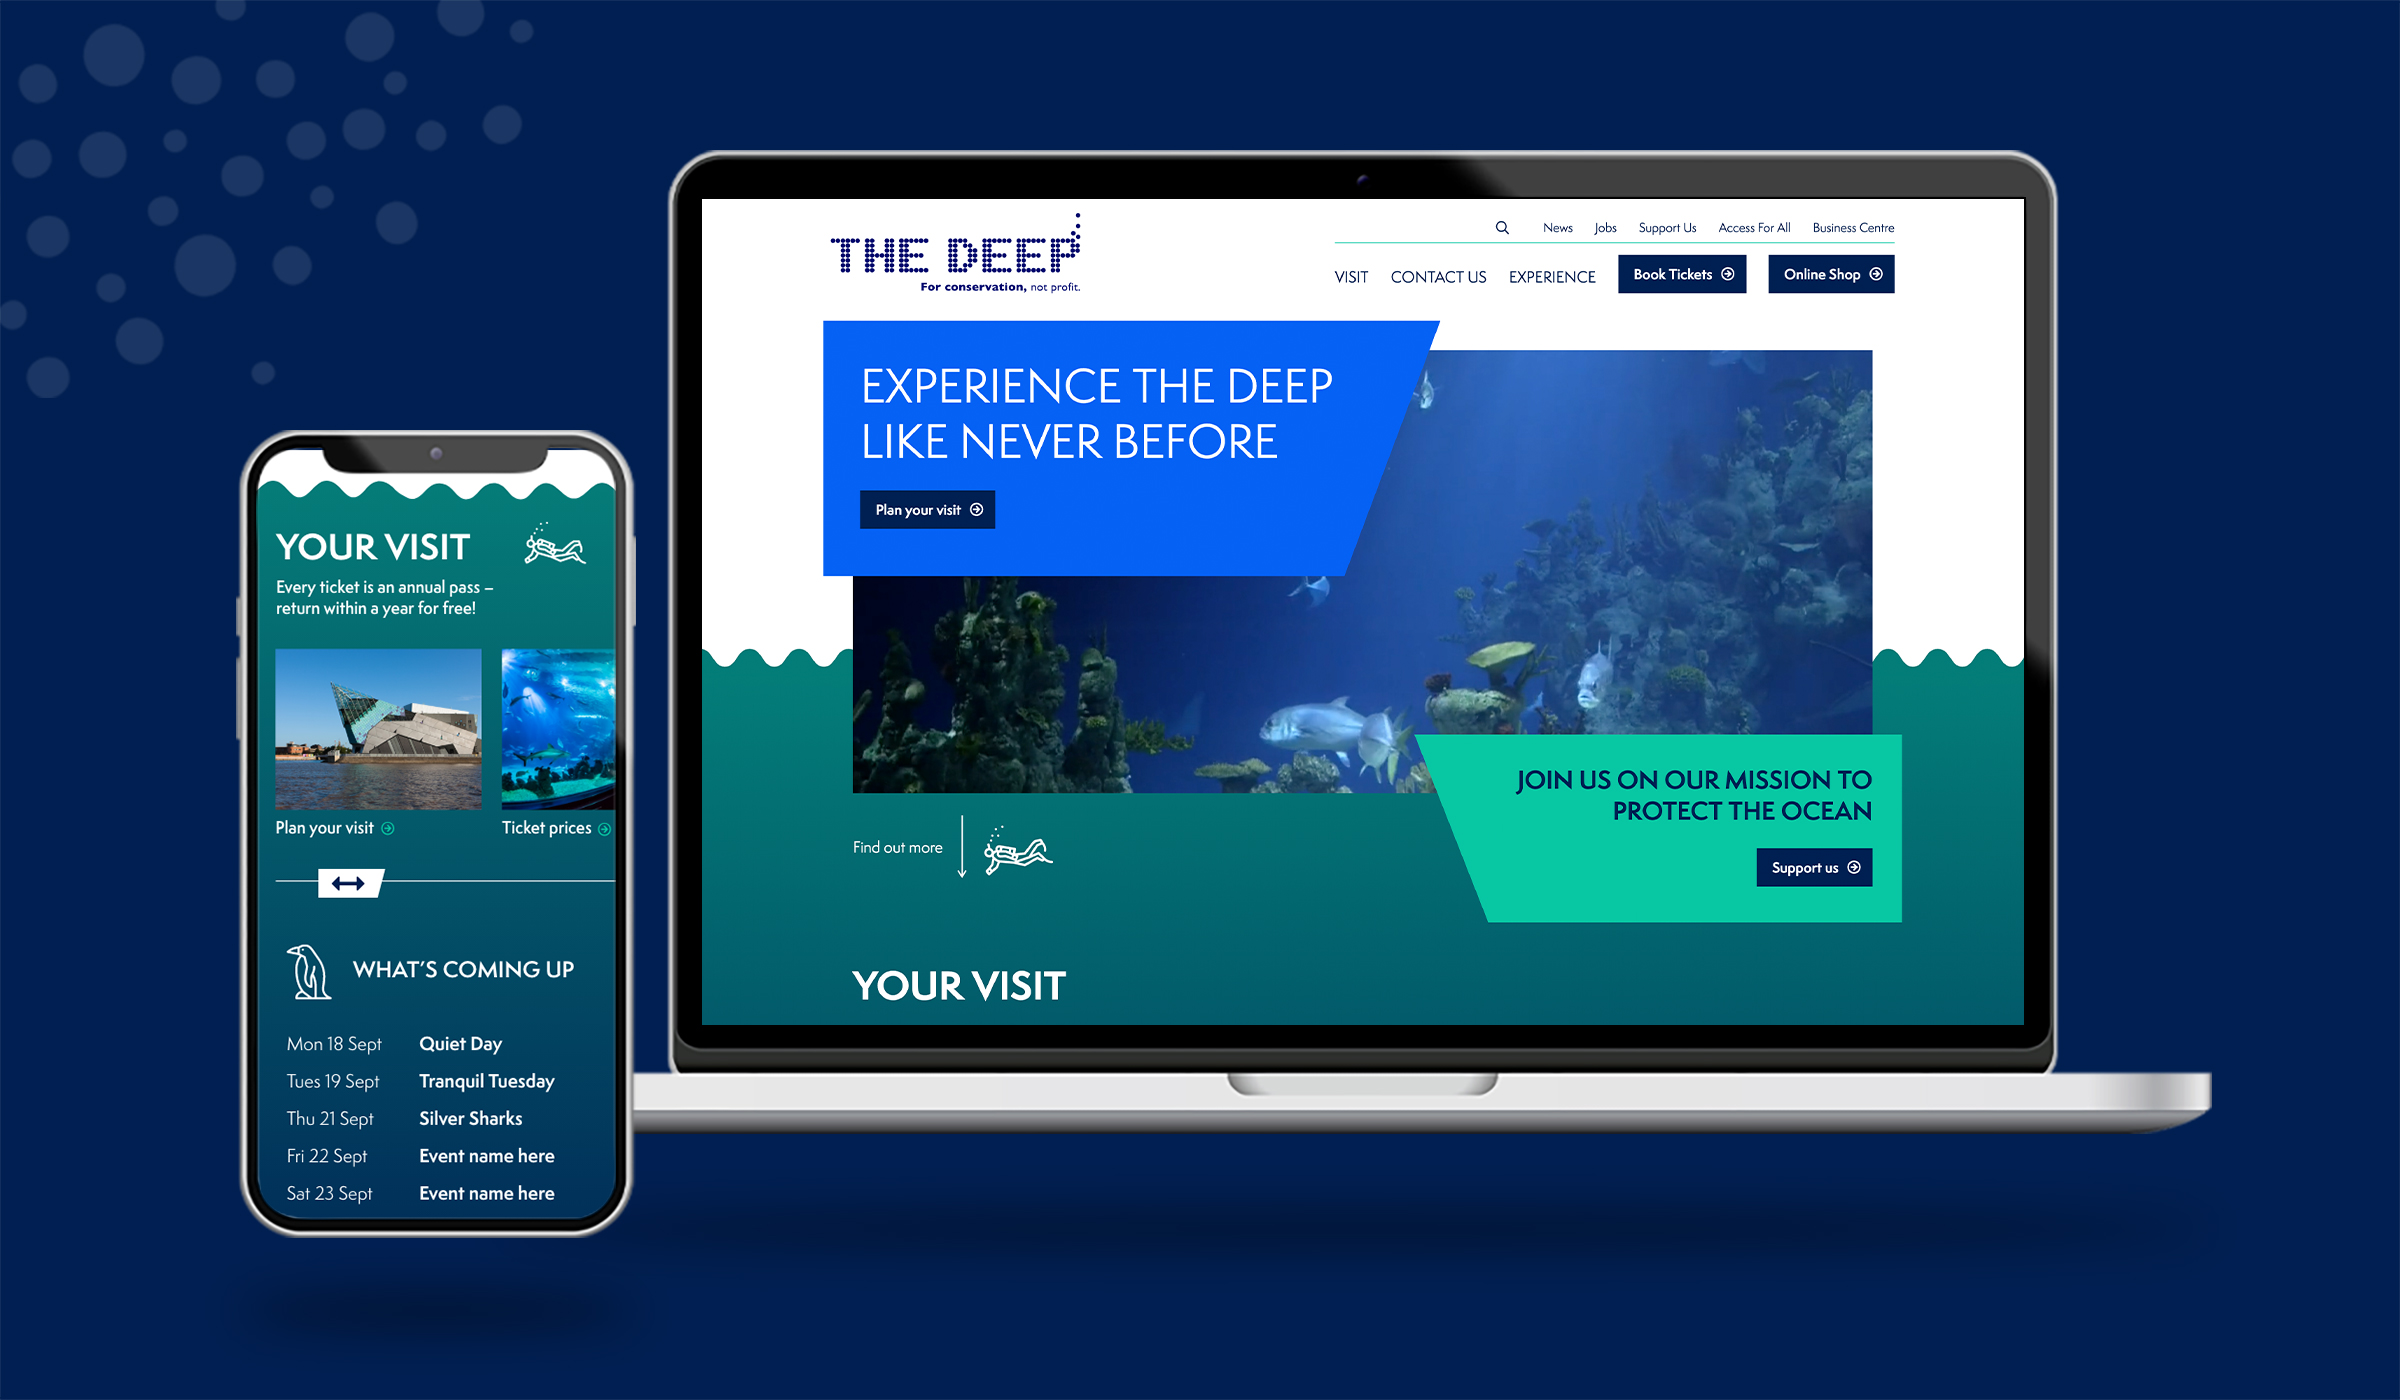 Website desktop and mobile version the Deep